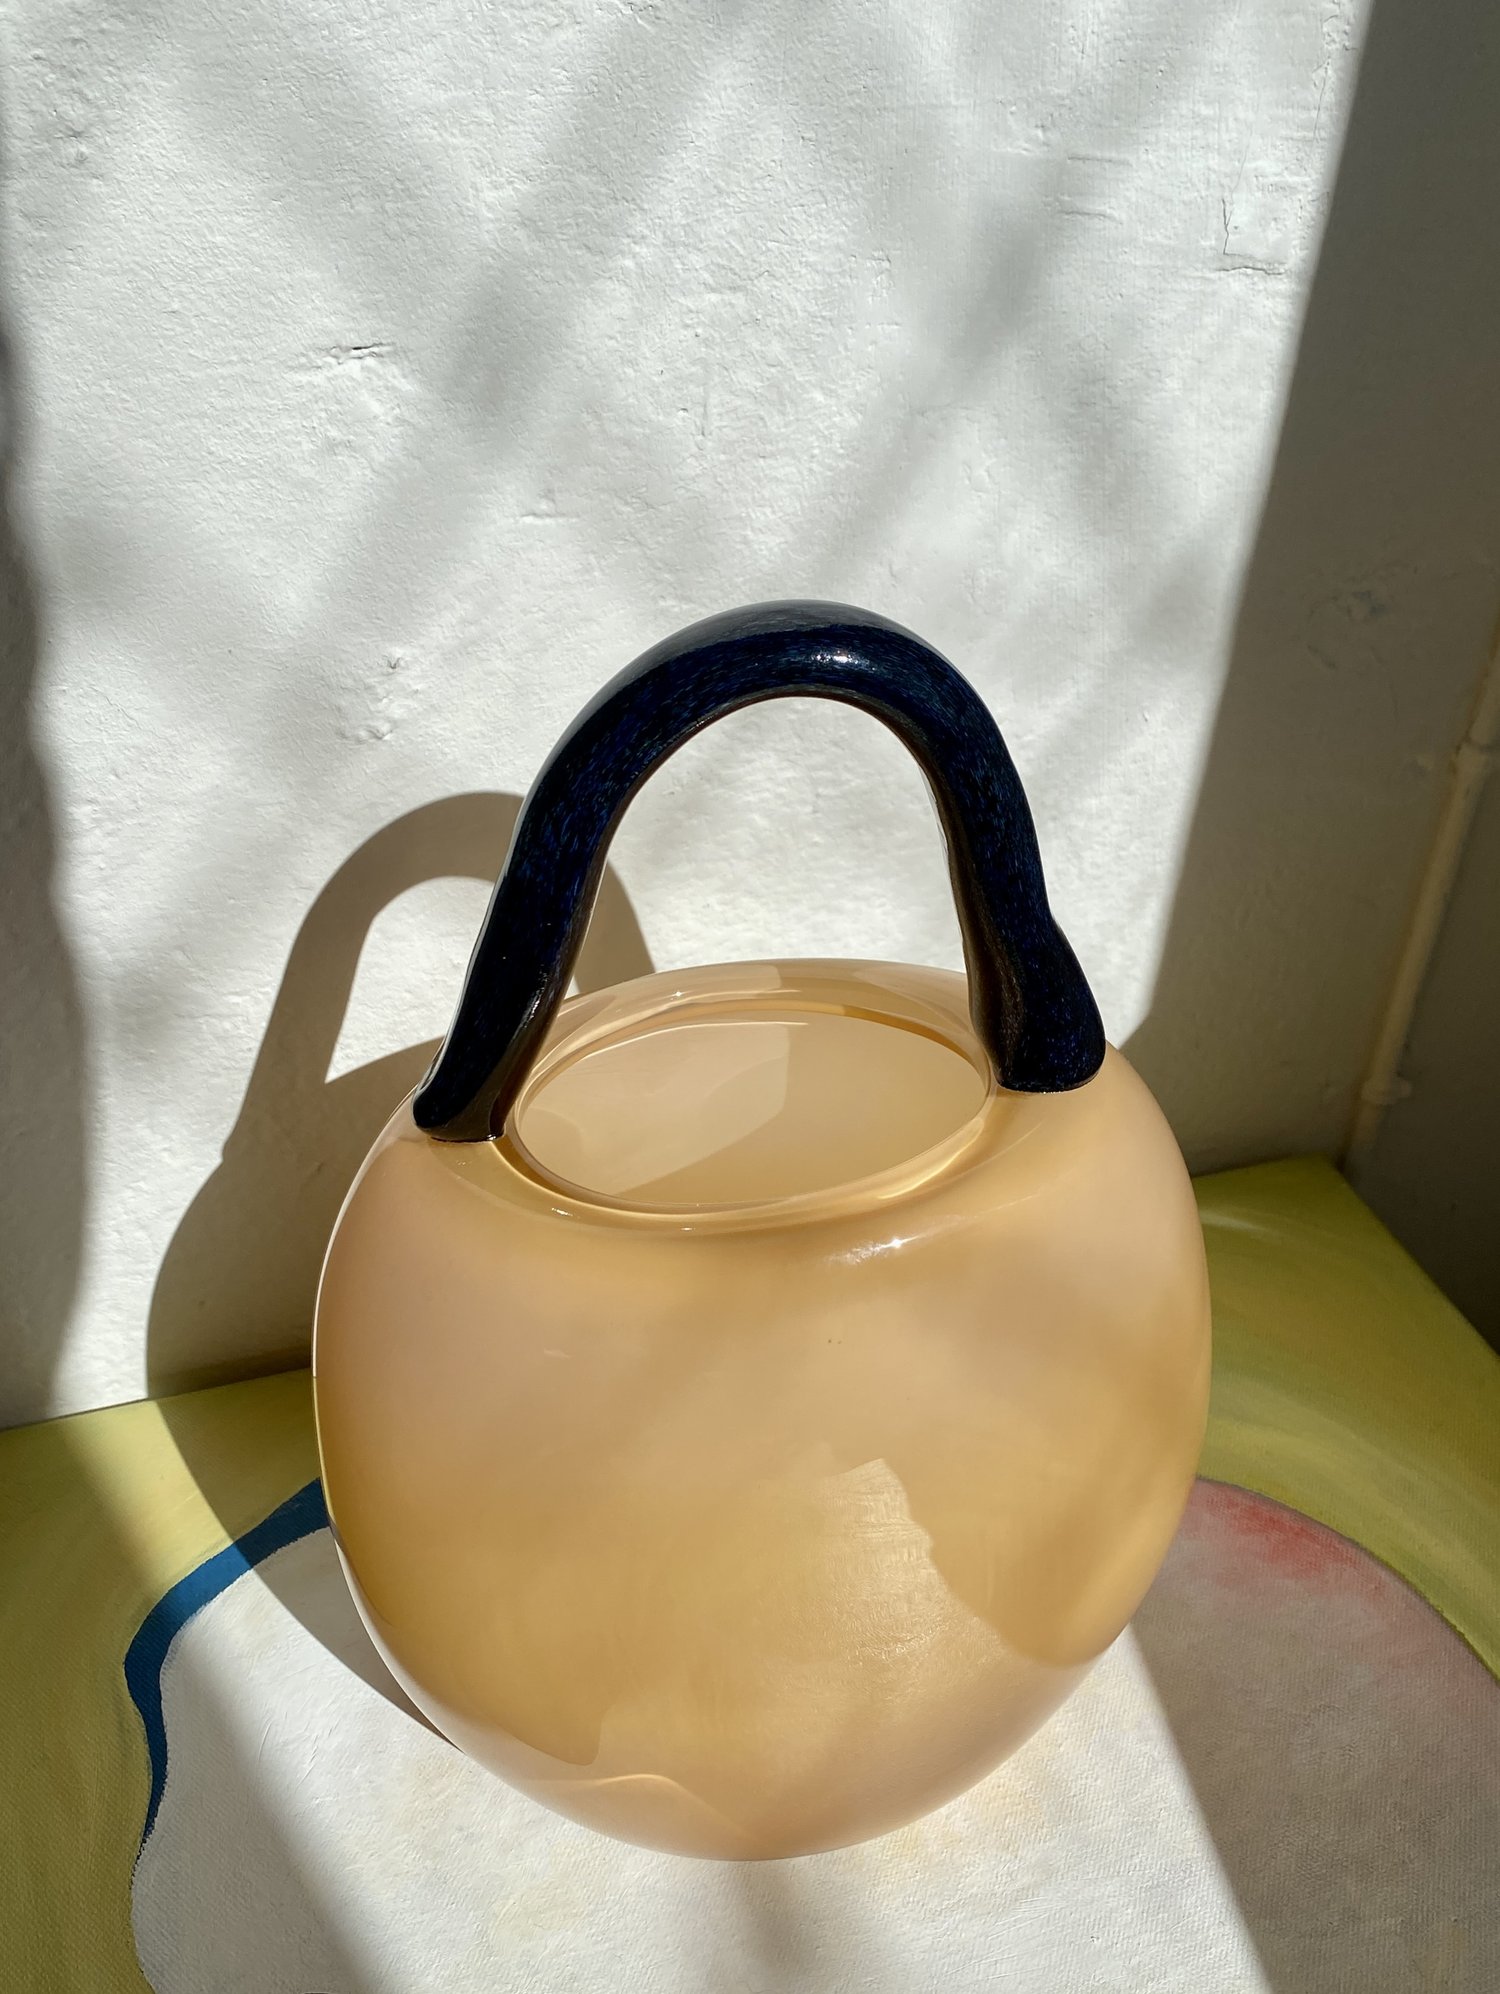 handmade glass vase borsetta lelefantino — L\'Elefantino